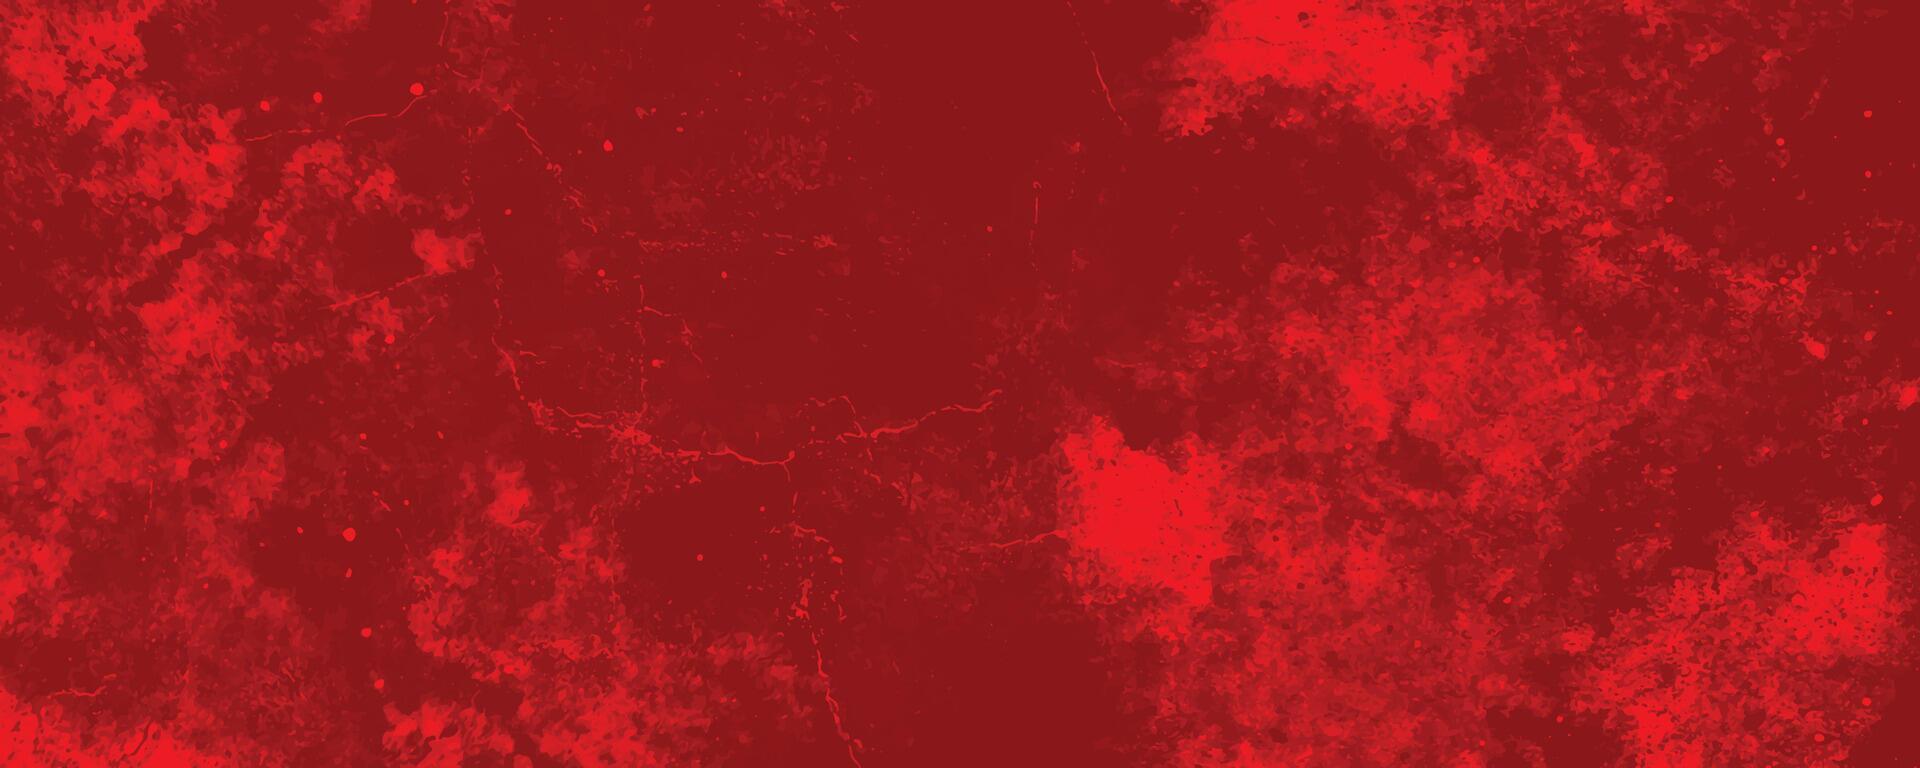 repa grunge urban bakgrund, bedrövad röd grunge textur bakgrund vektor